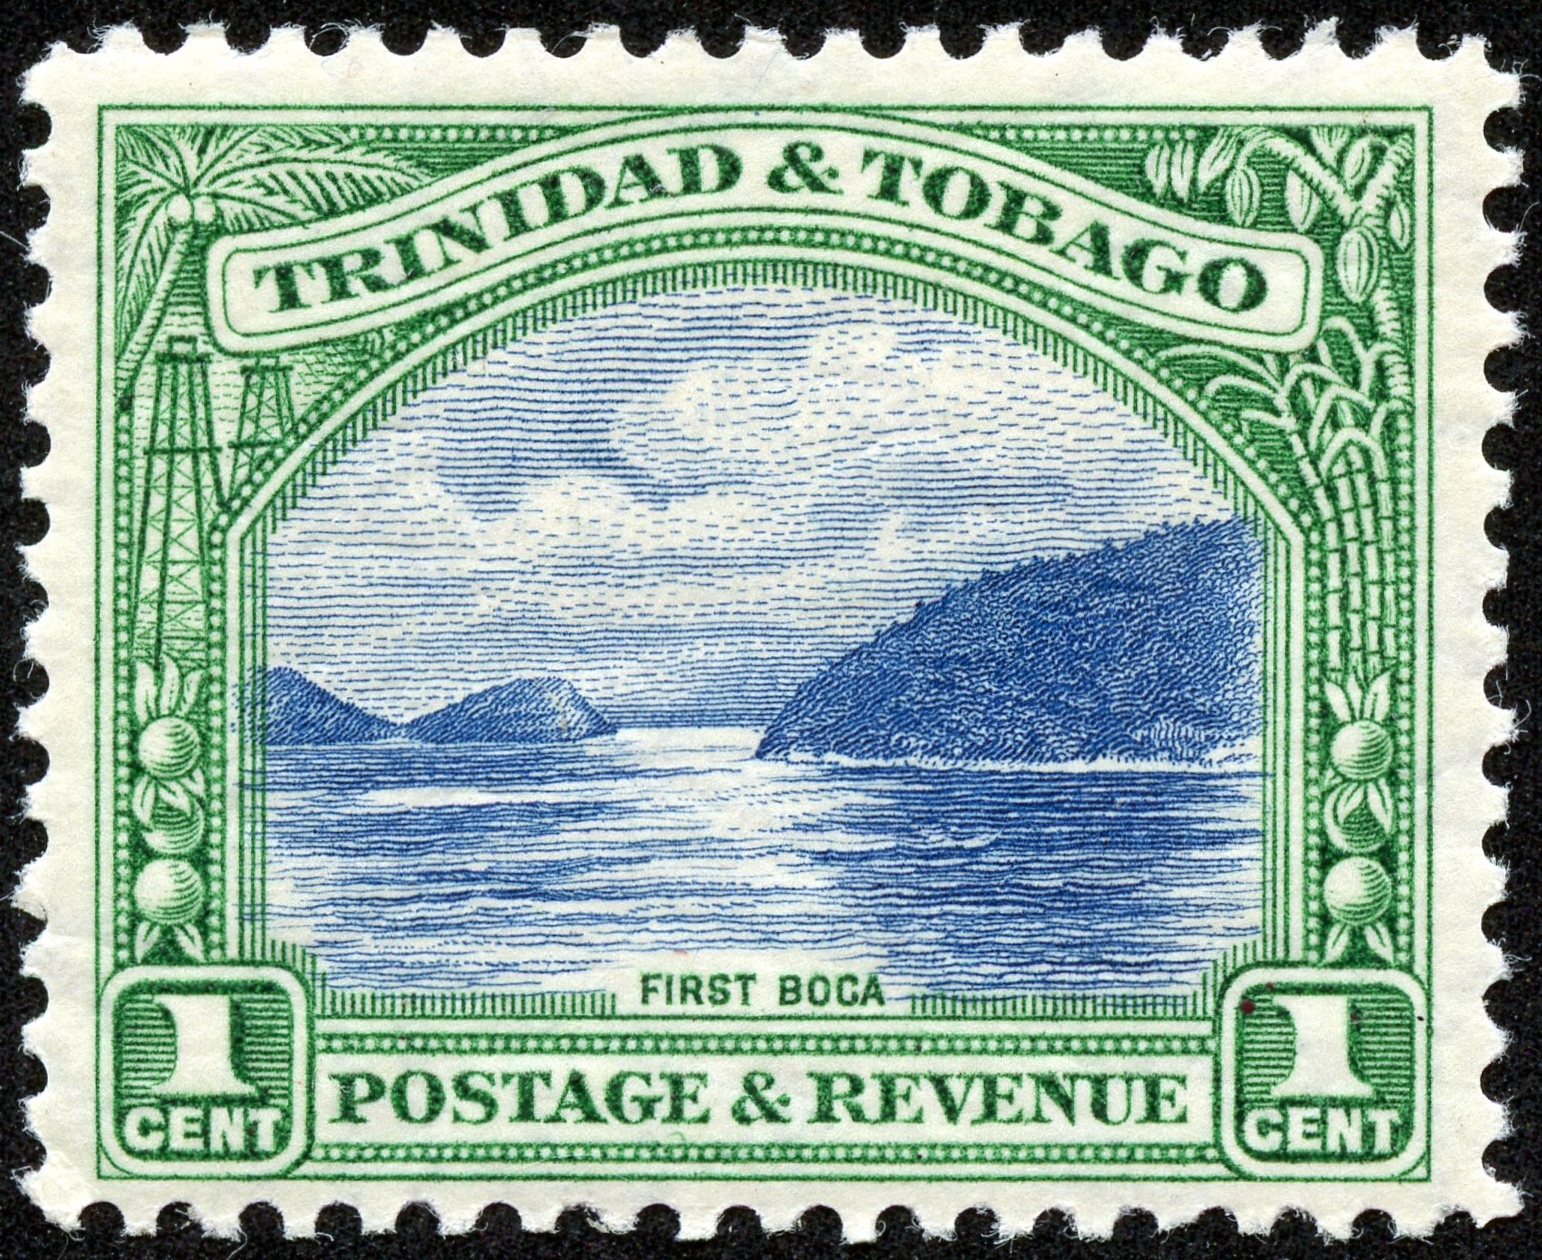 1 mark each. Марки Trinidad Tobago. Тринидад и Тобаго фауна марки. Марки Trinidad Tobago животные. Марки Trinidad Tobago рыбы.